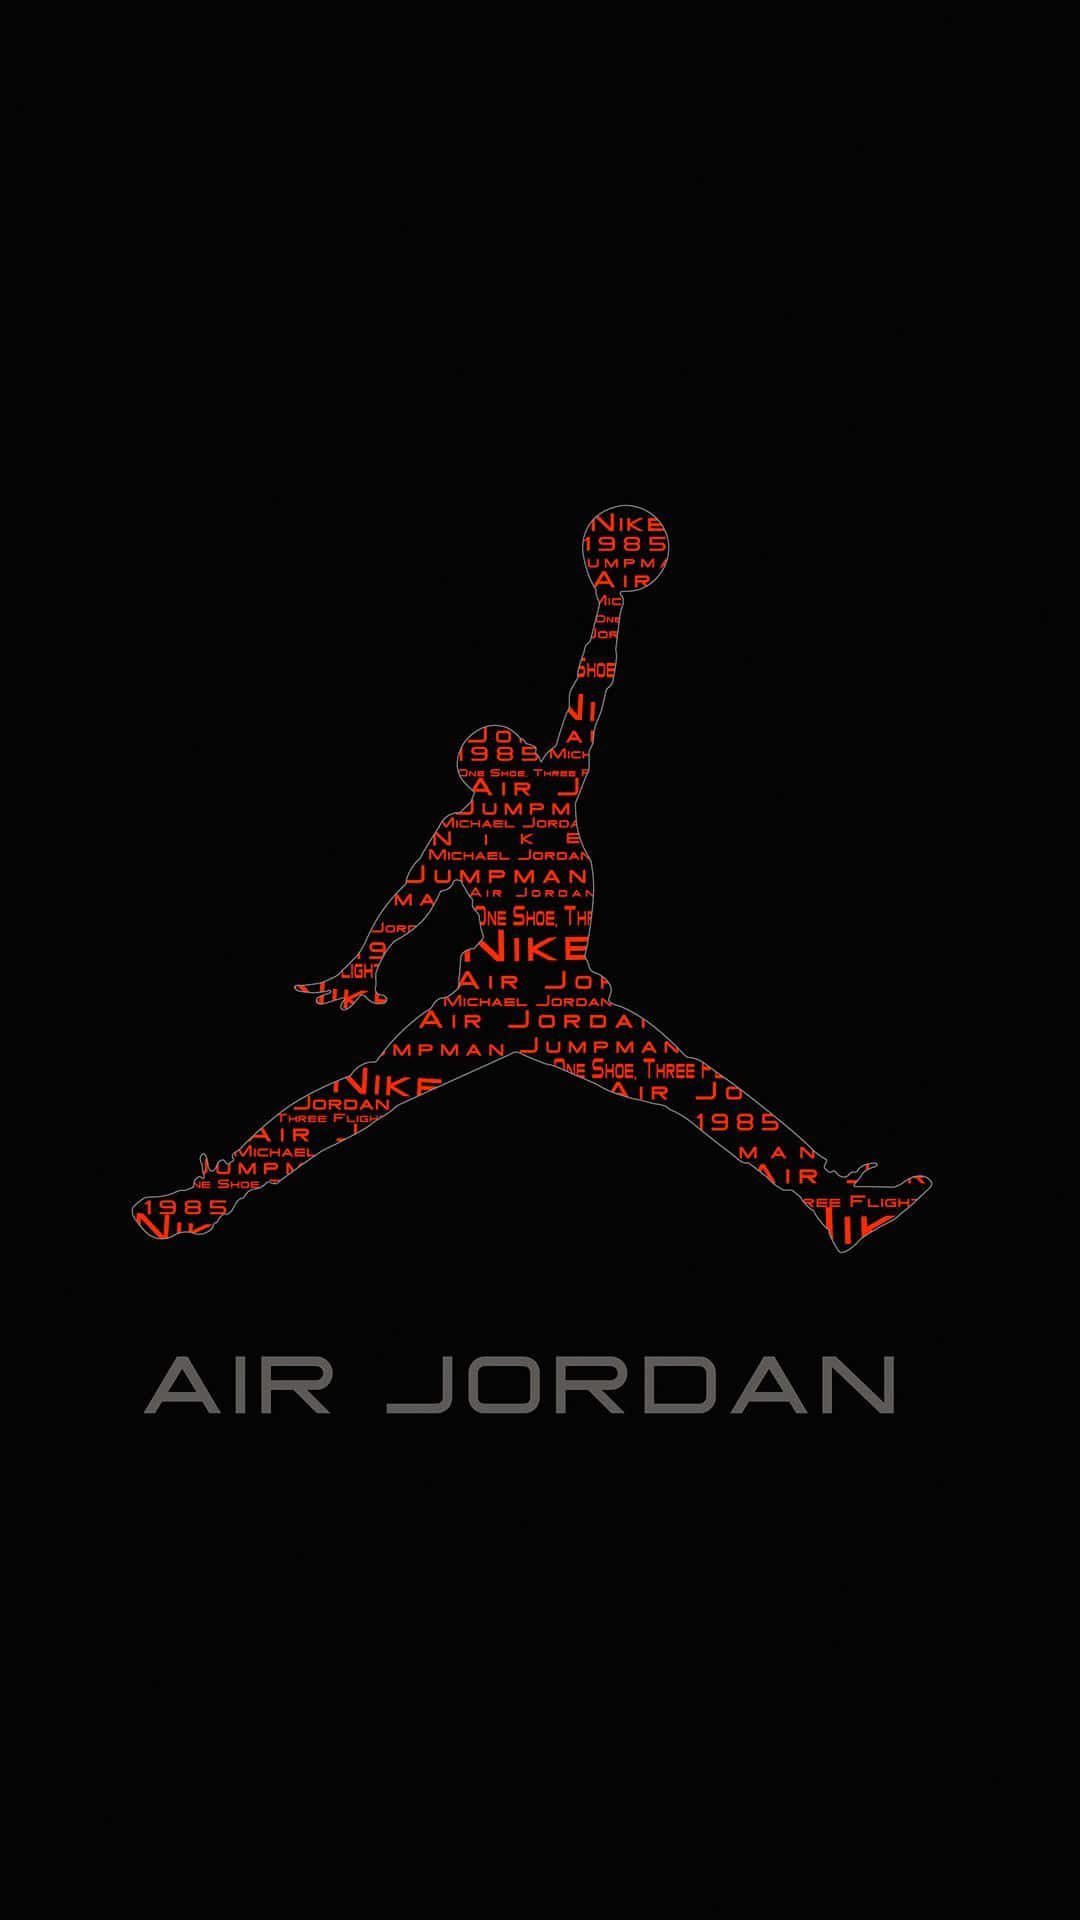 Opgrader din sneaker-samling med ikonet Nike Air Jordan gennem tiden. Wallpaper